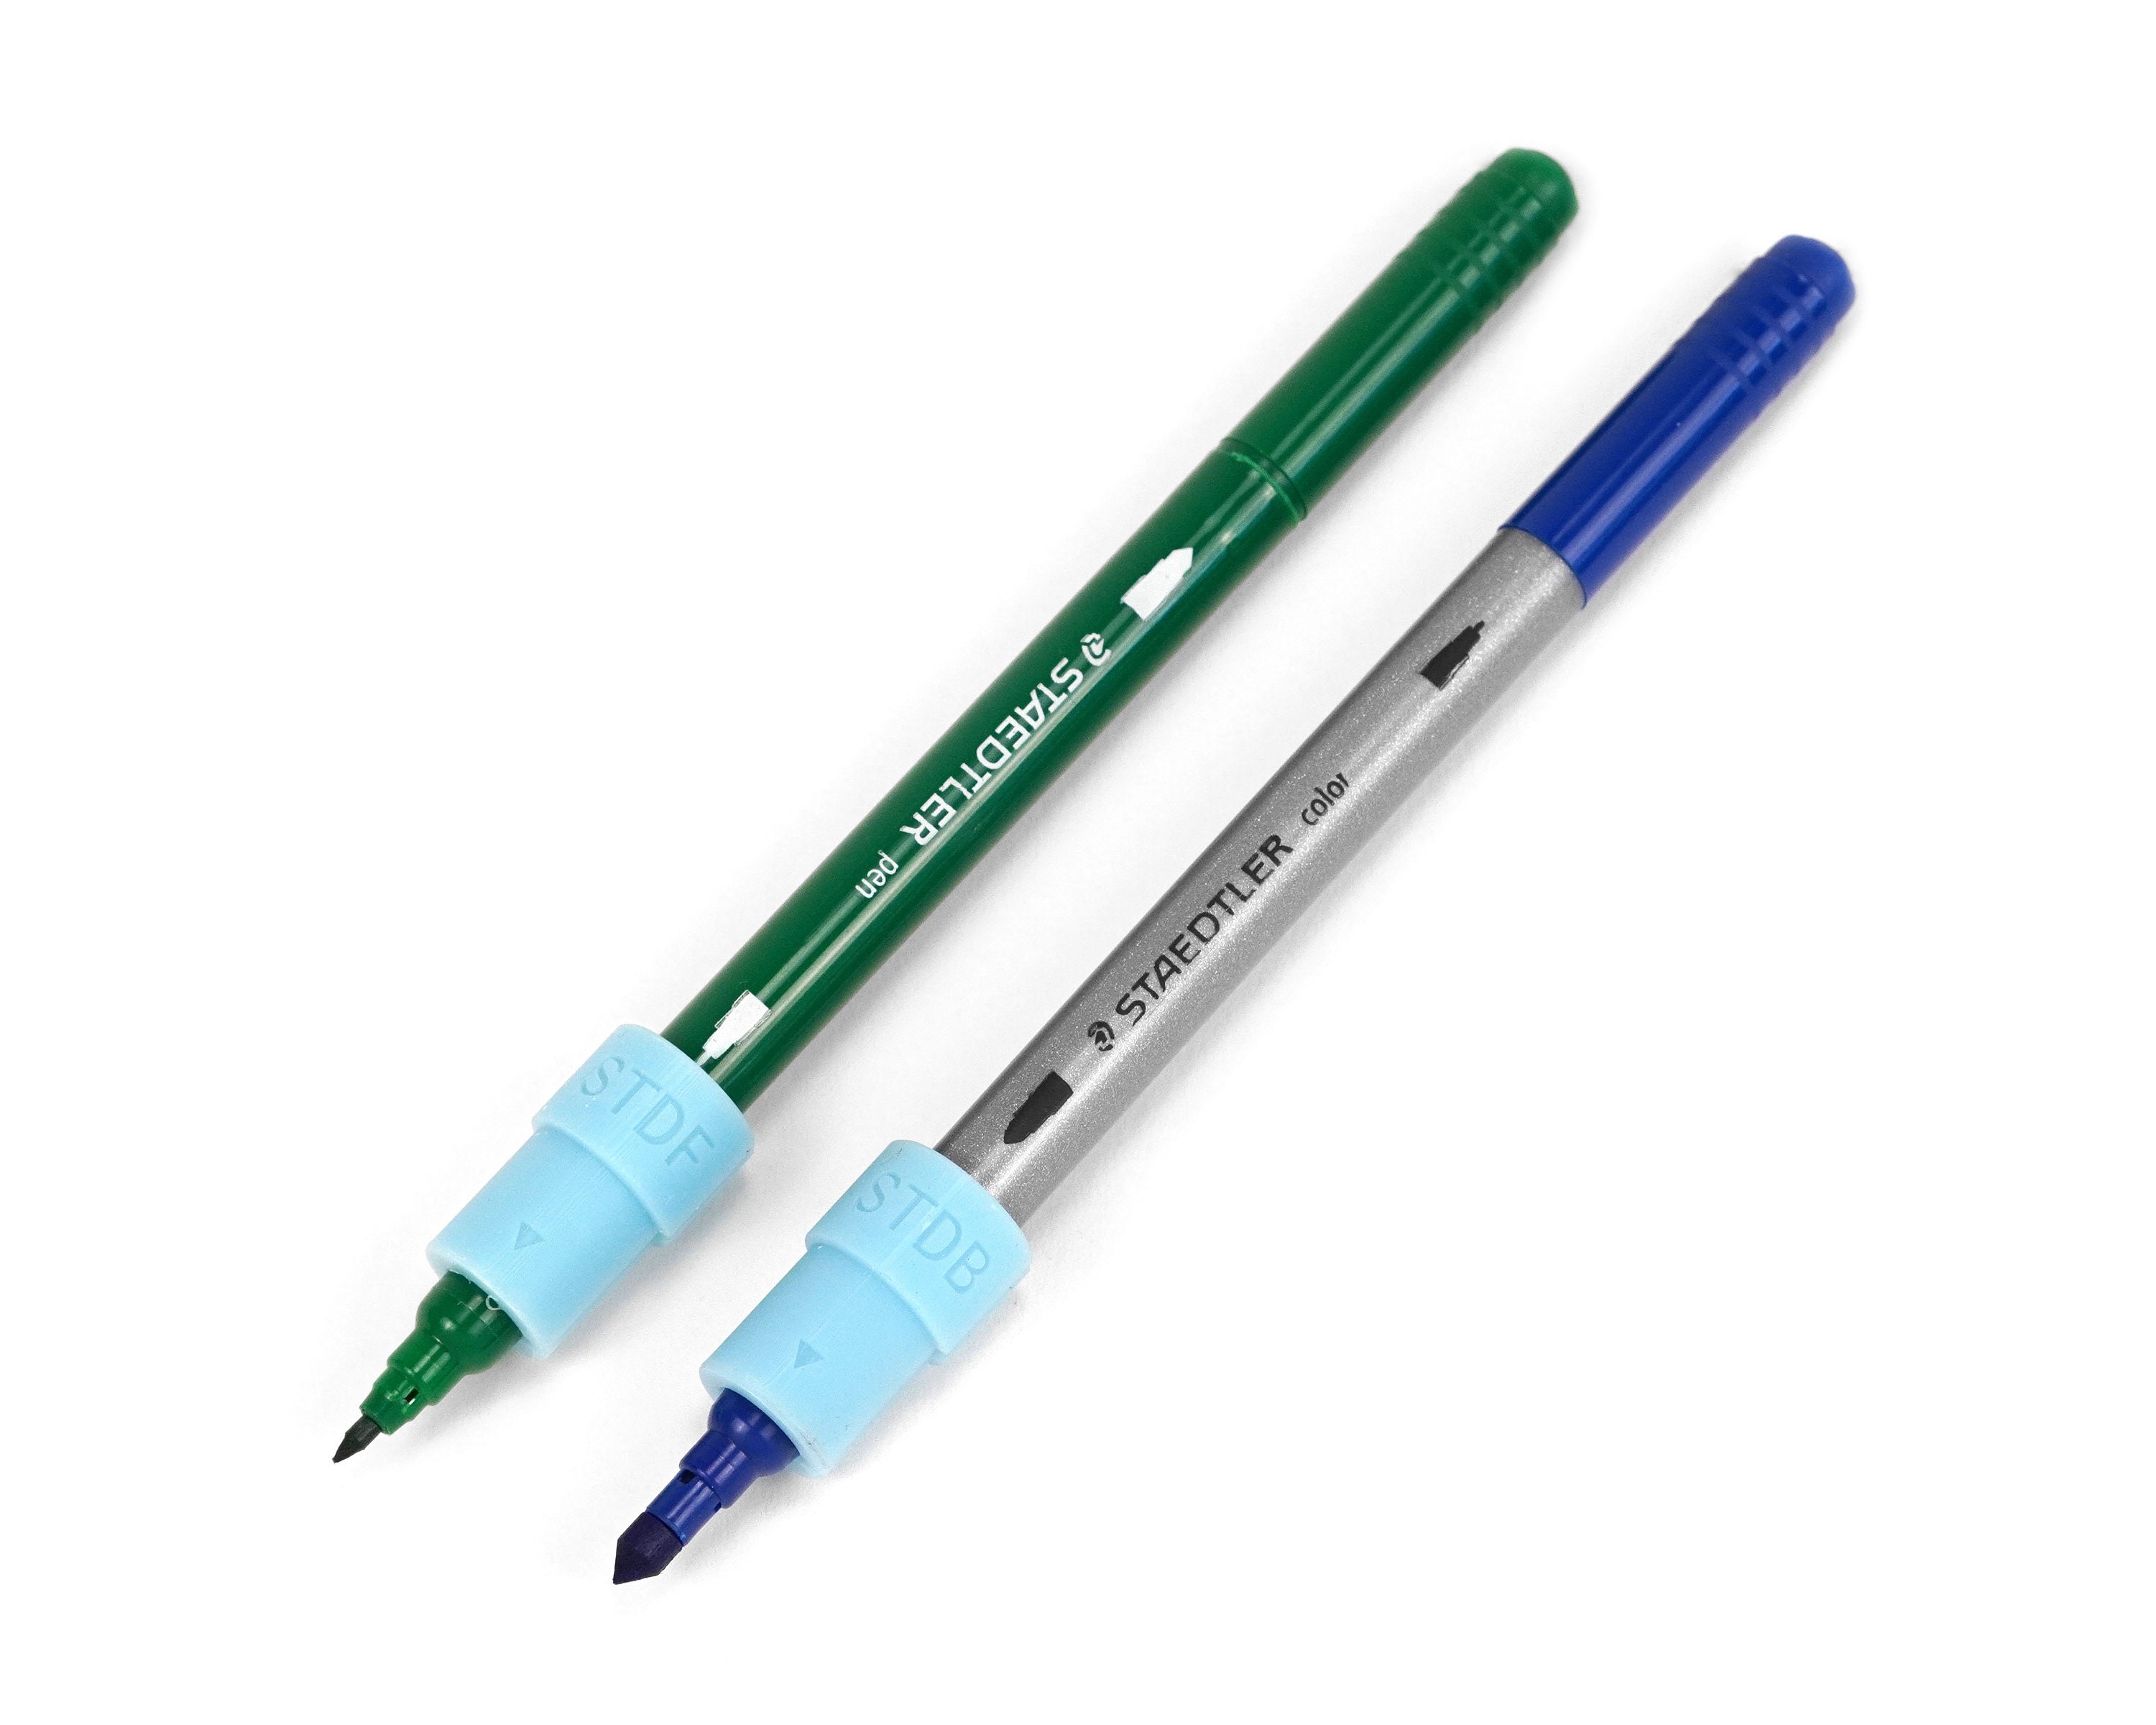 Cricut Explore/maker Adapter for Staedtler Triplus Fineliner Pens